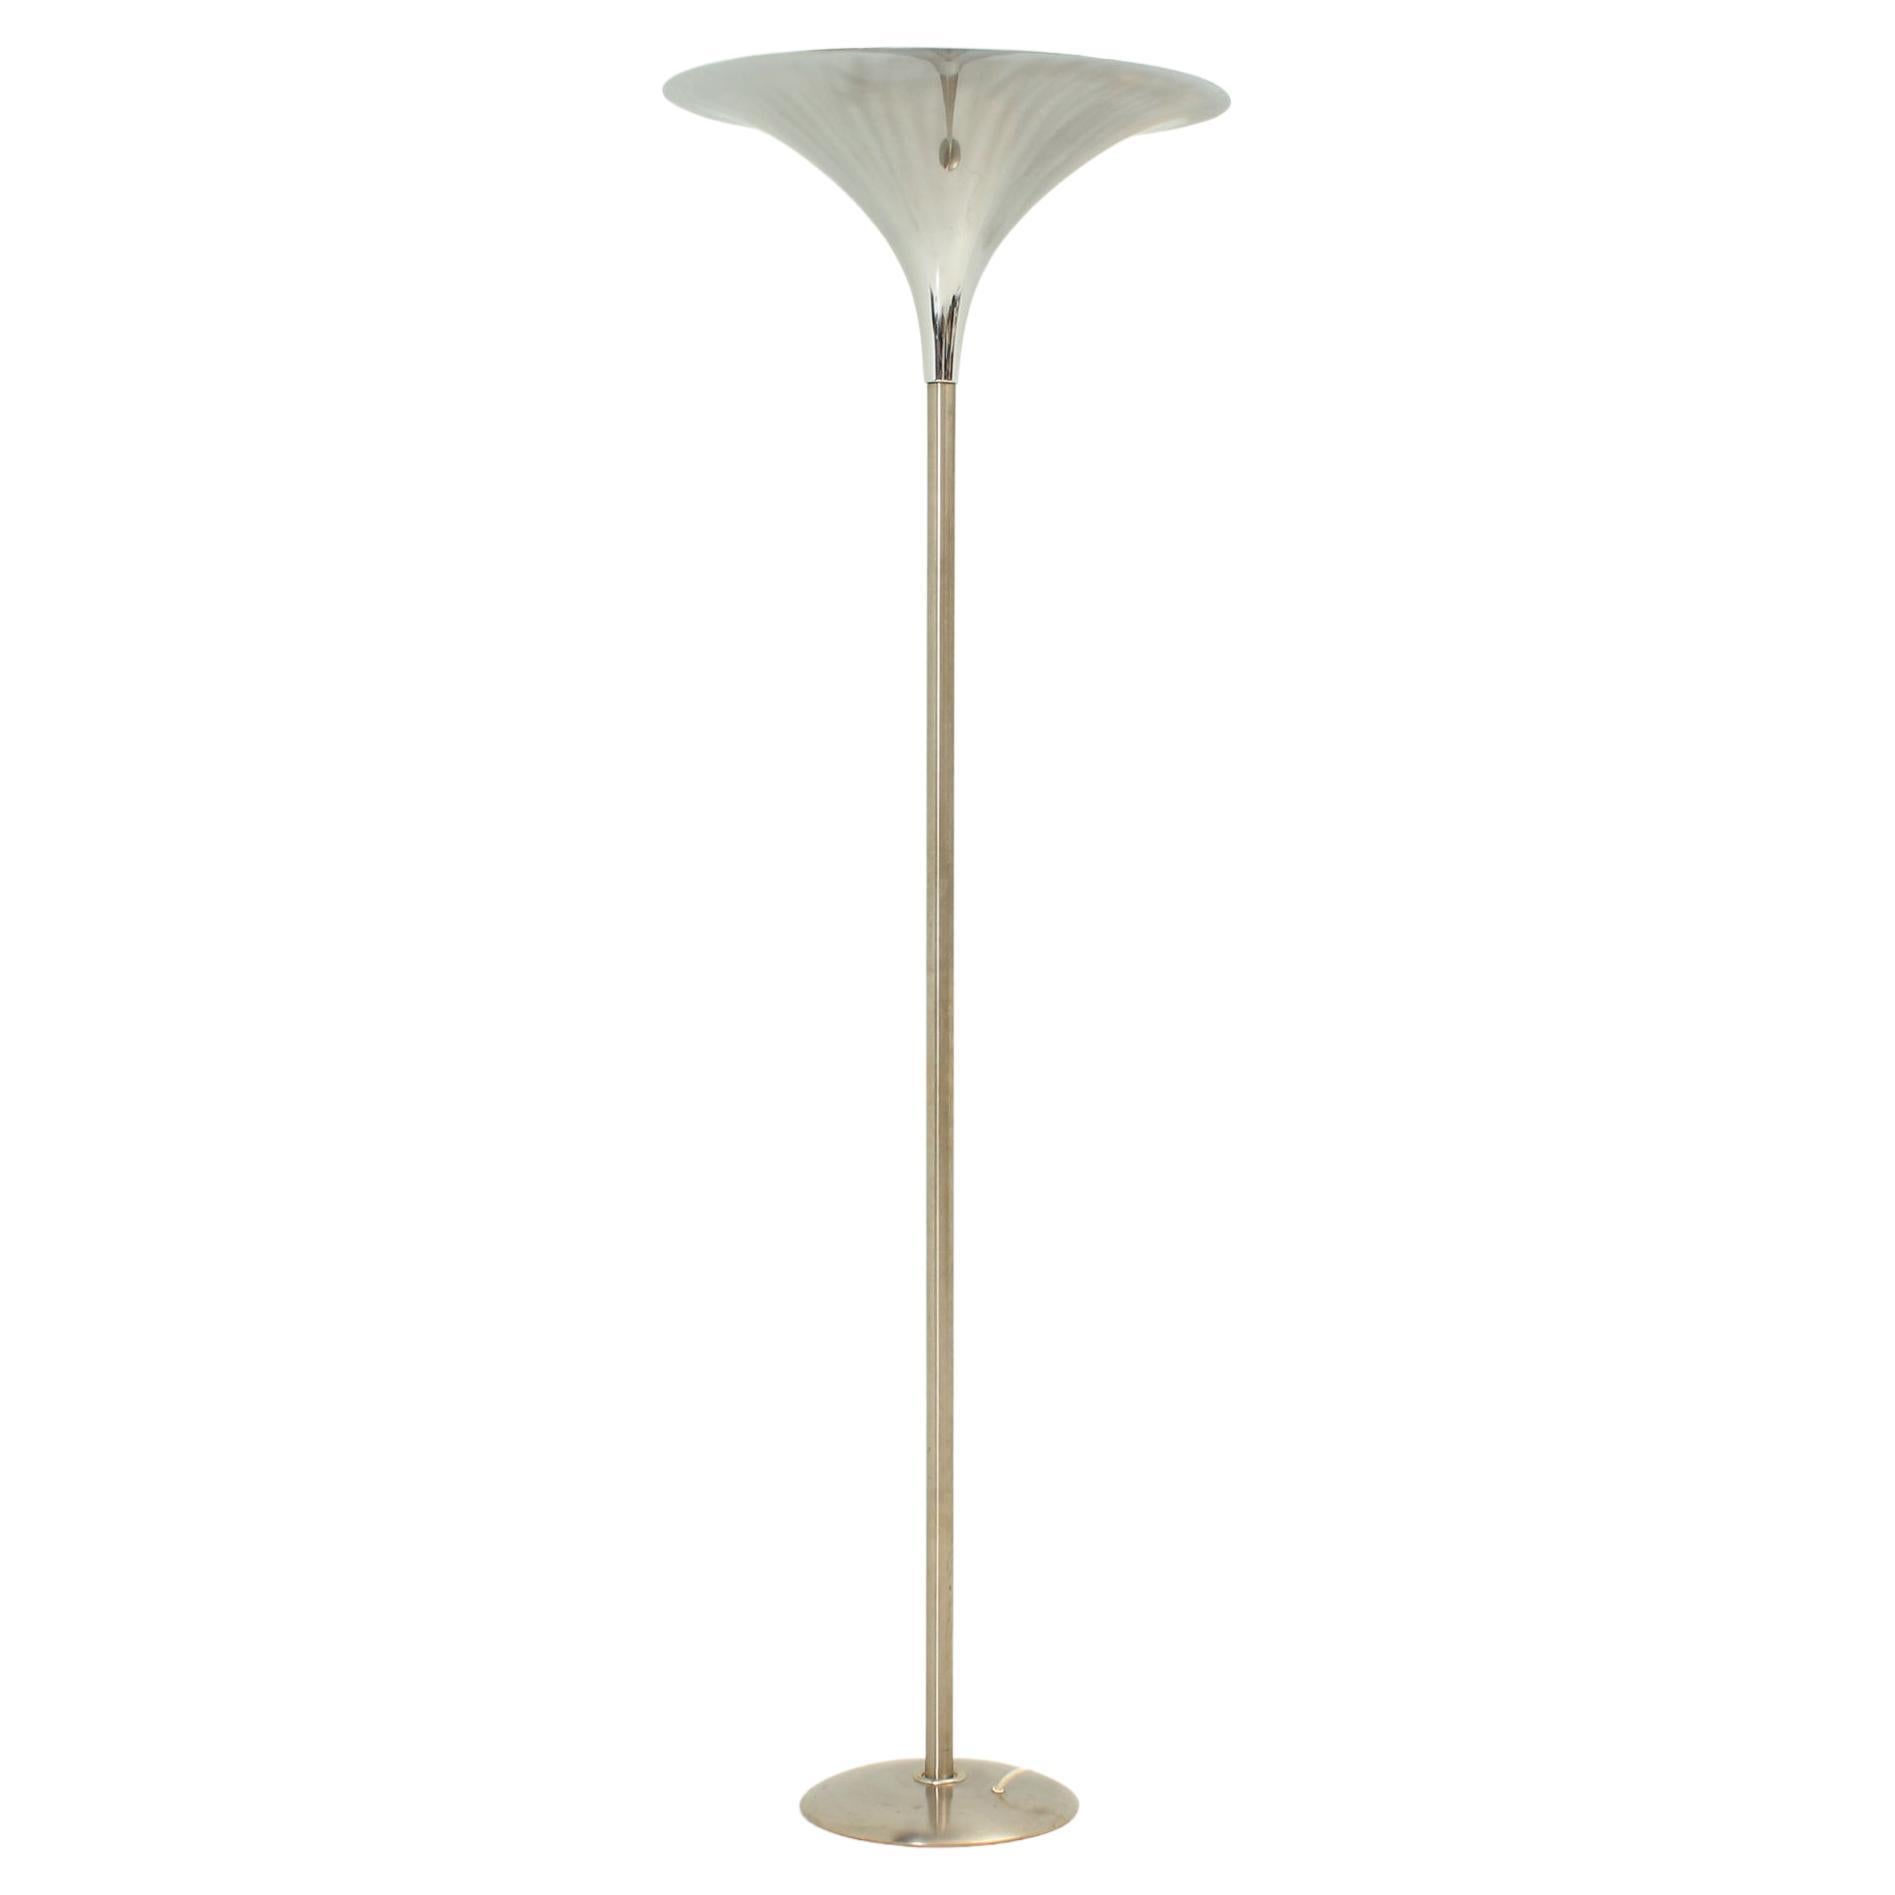 Large Chromed Floor Lamp from 1970's For Sale